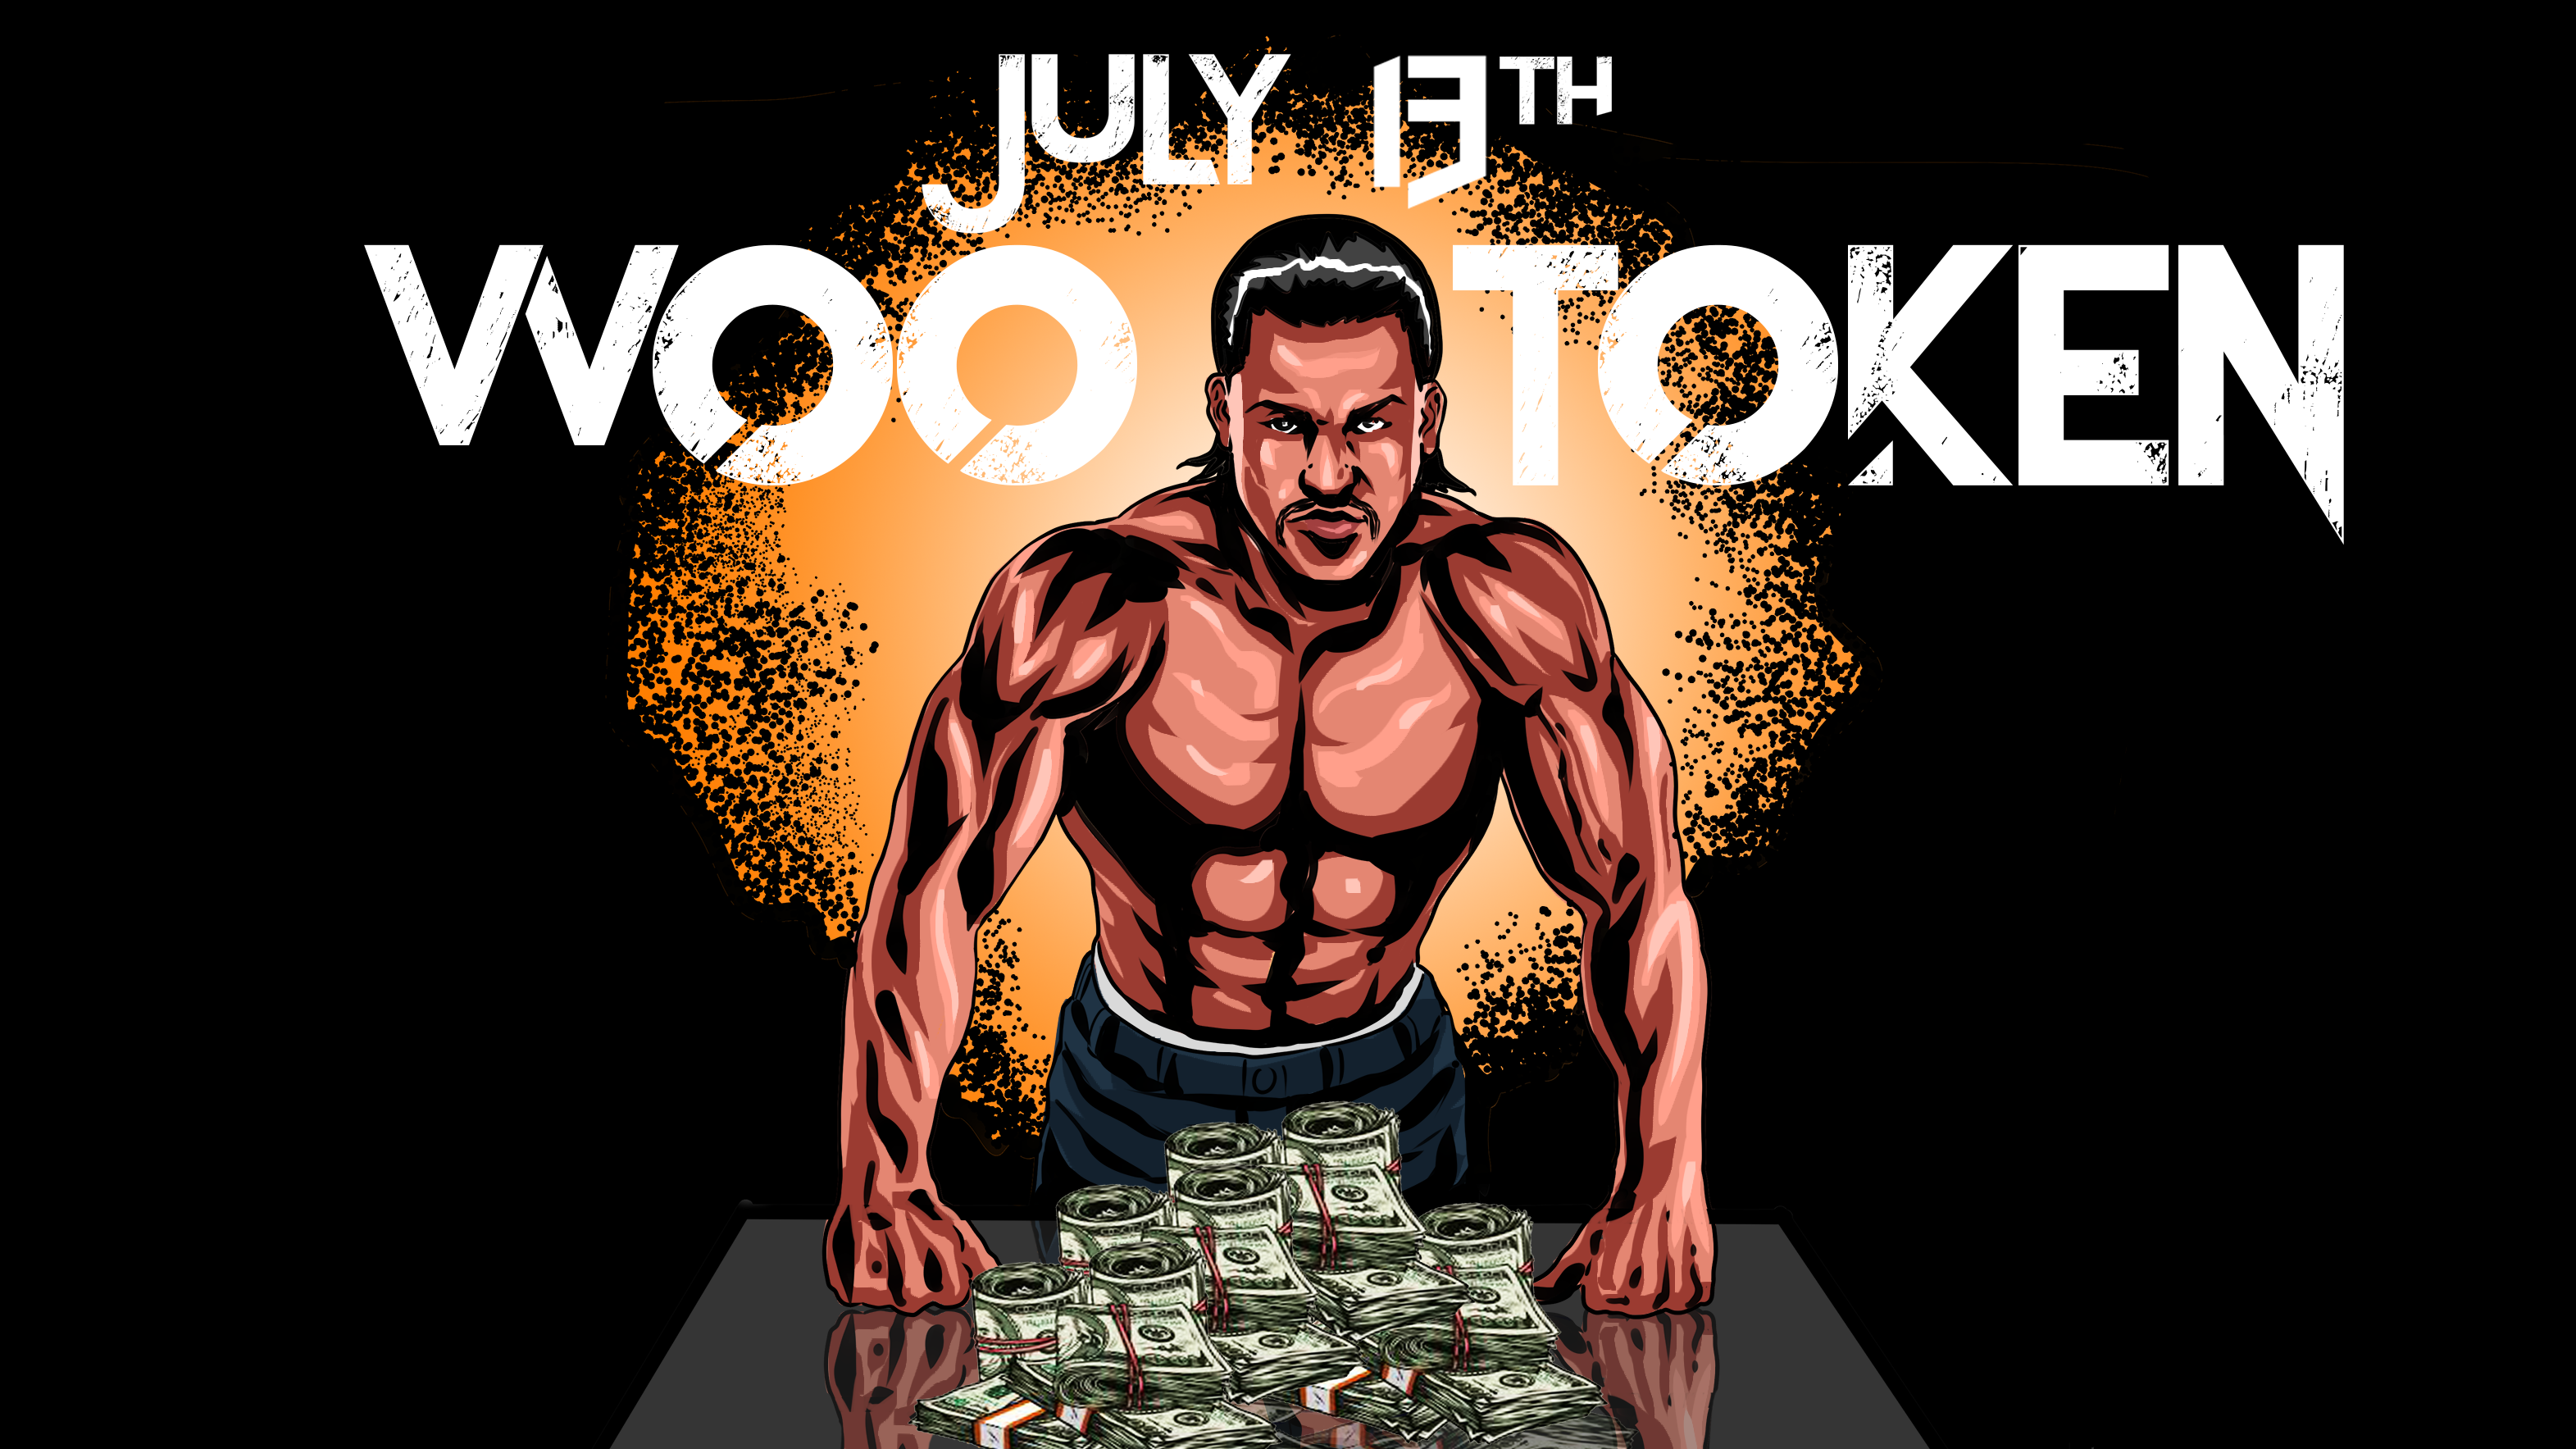 @wrestorgonline/woo-token-airdrop-starting-july-13th